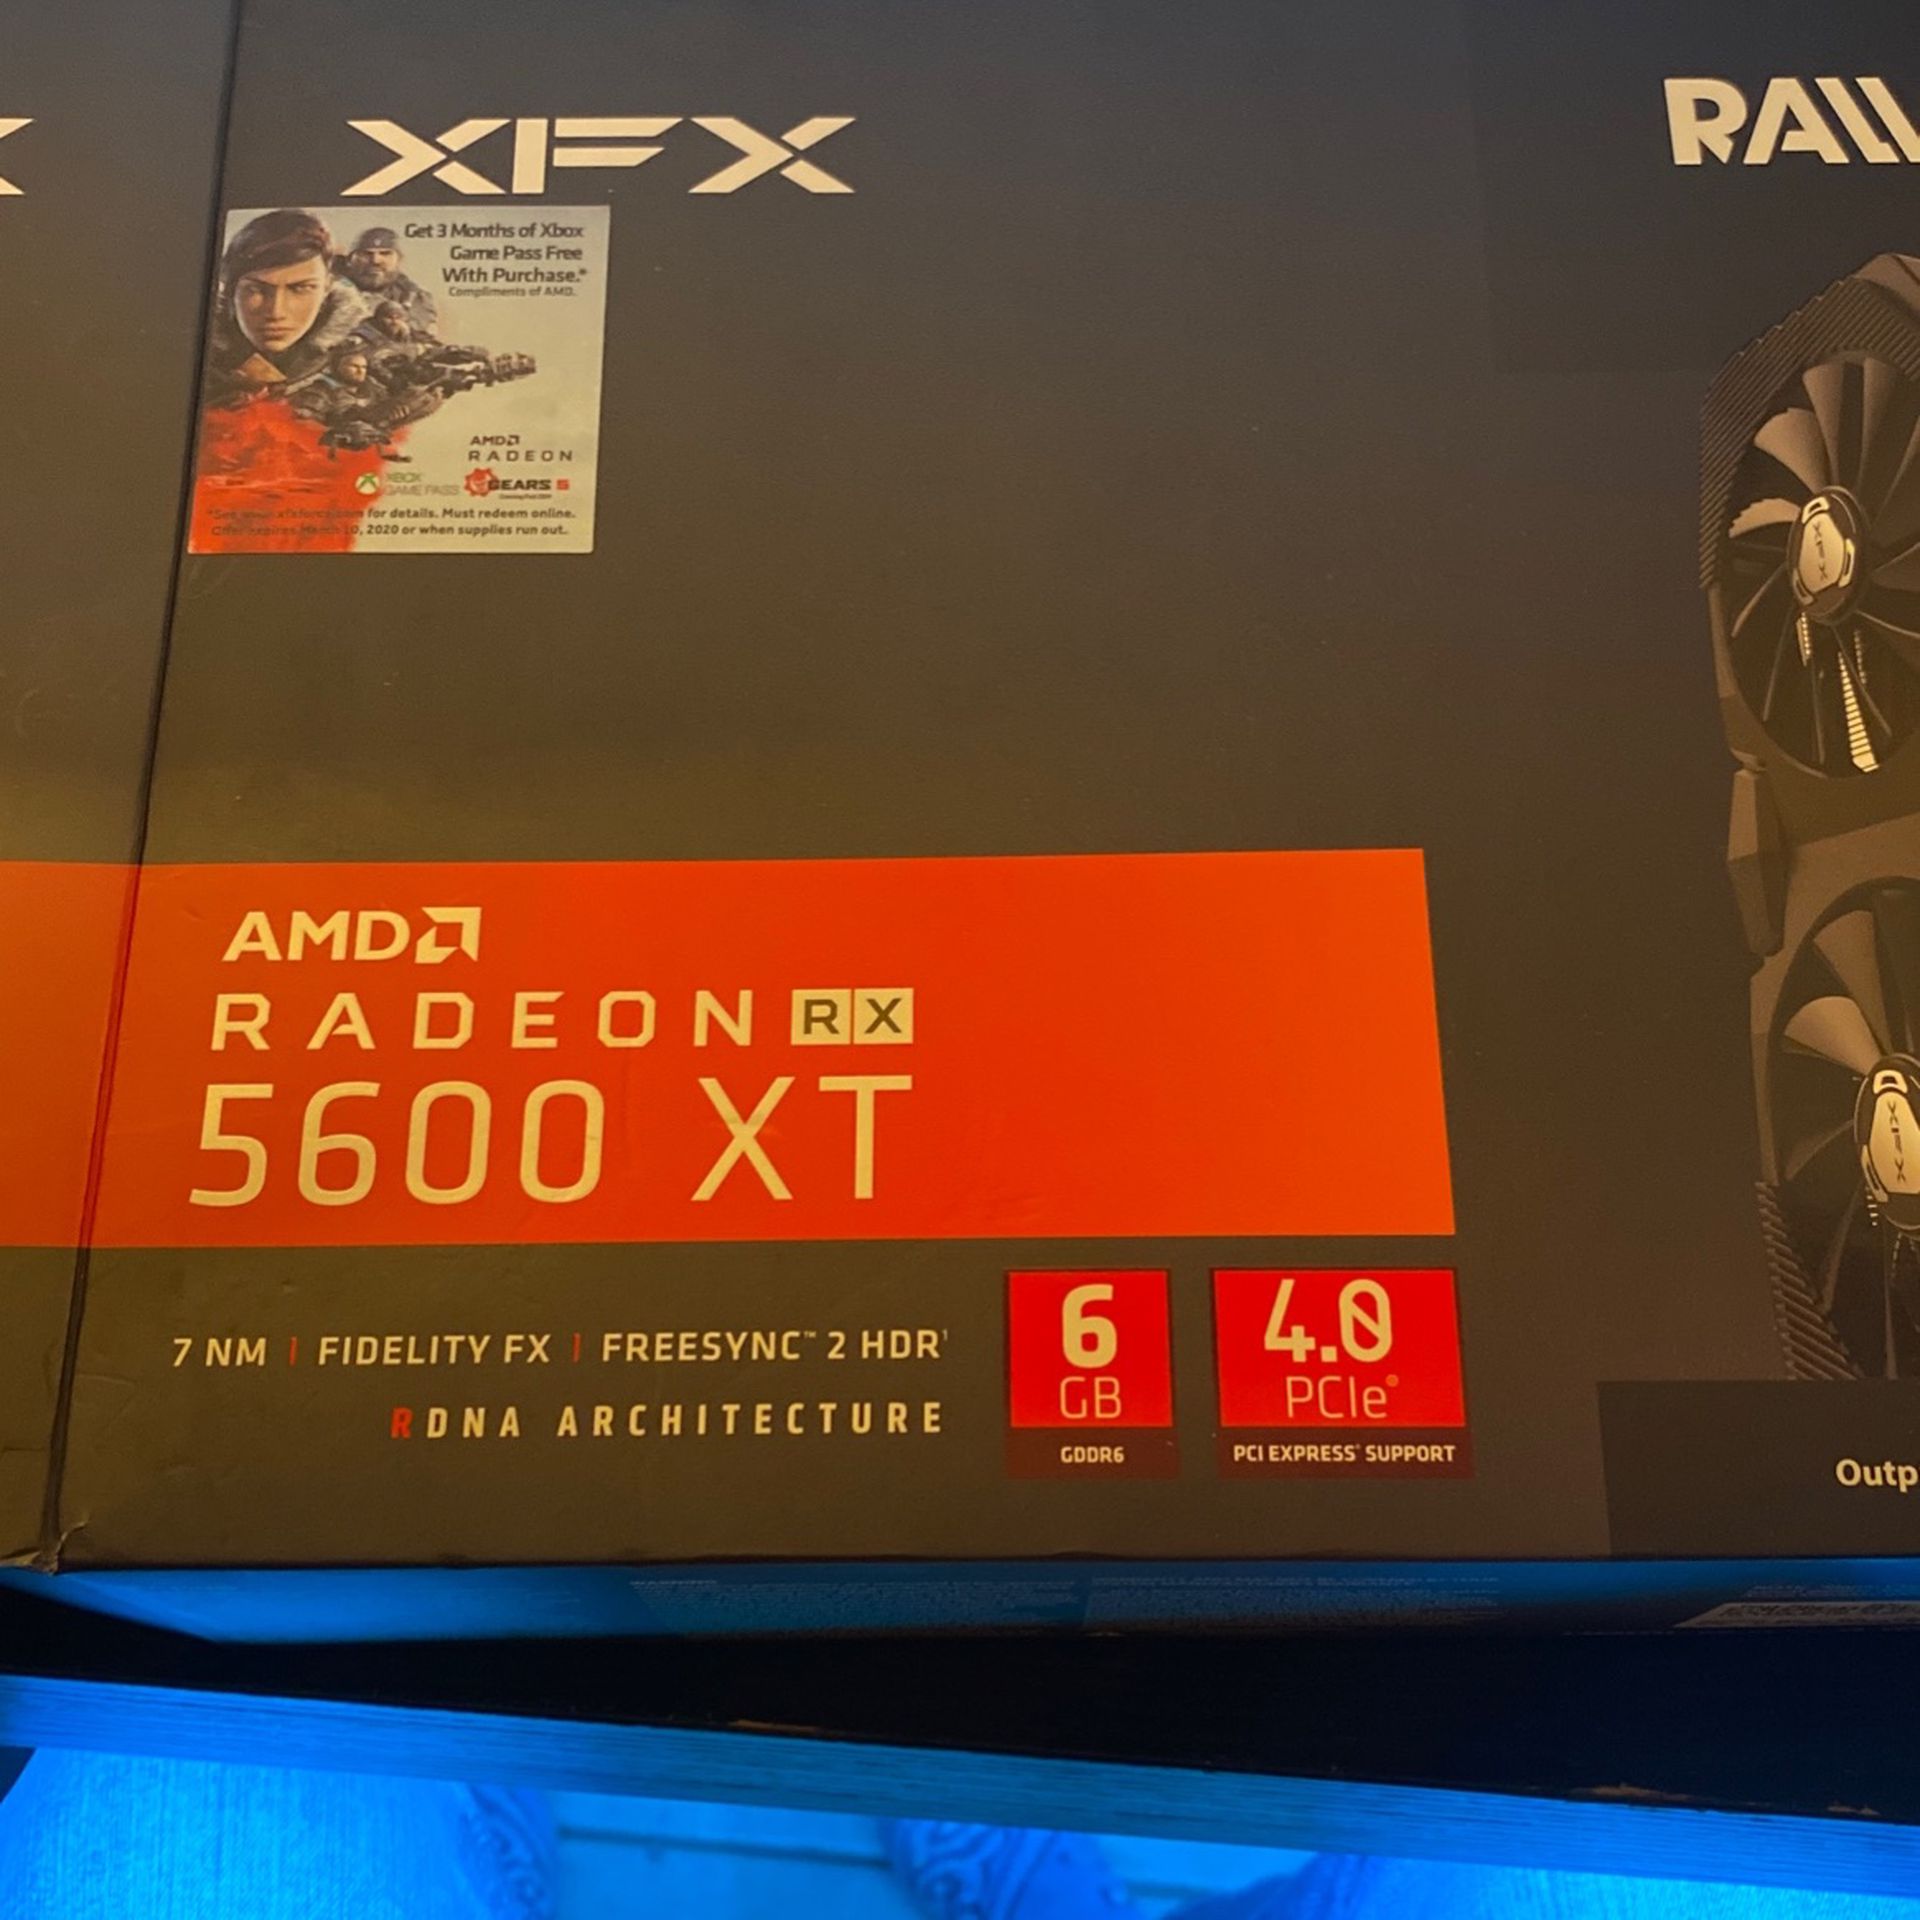 Radeon Rx 5600XT